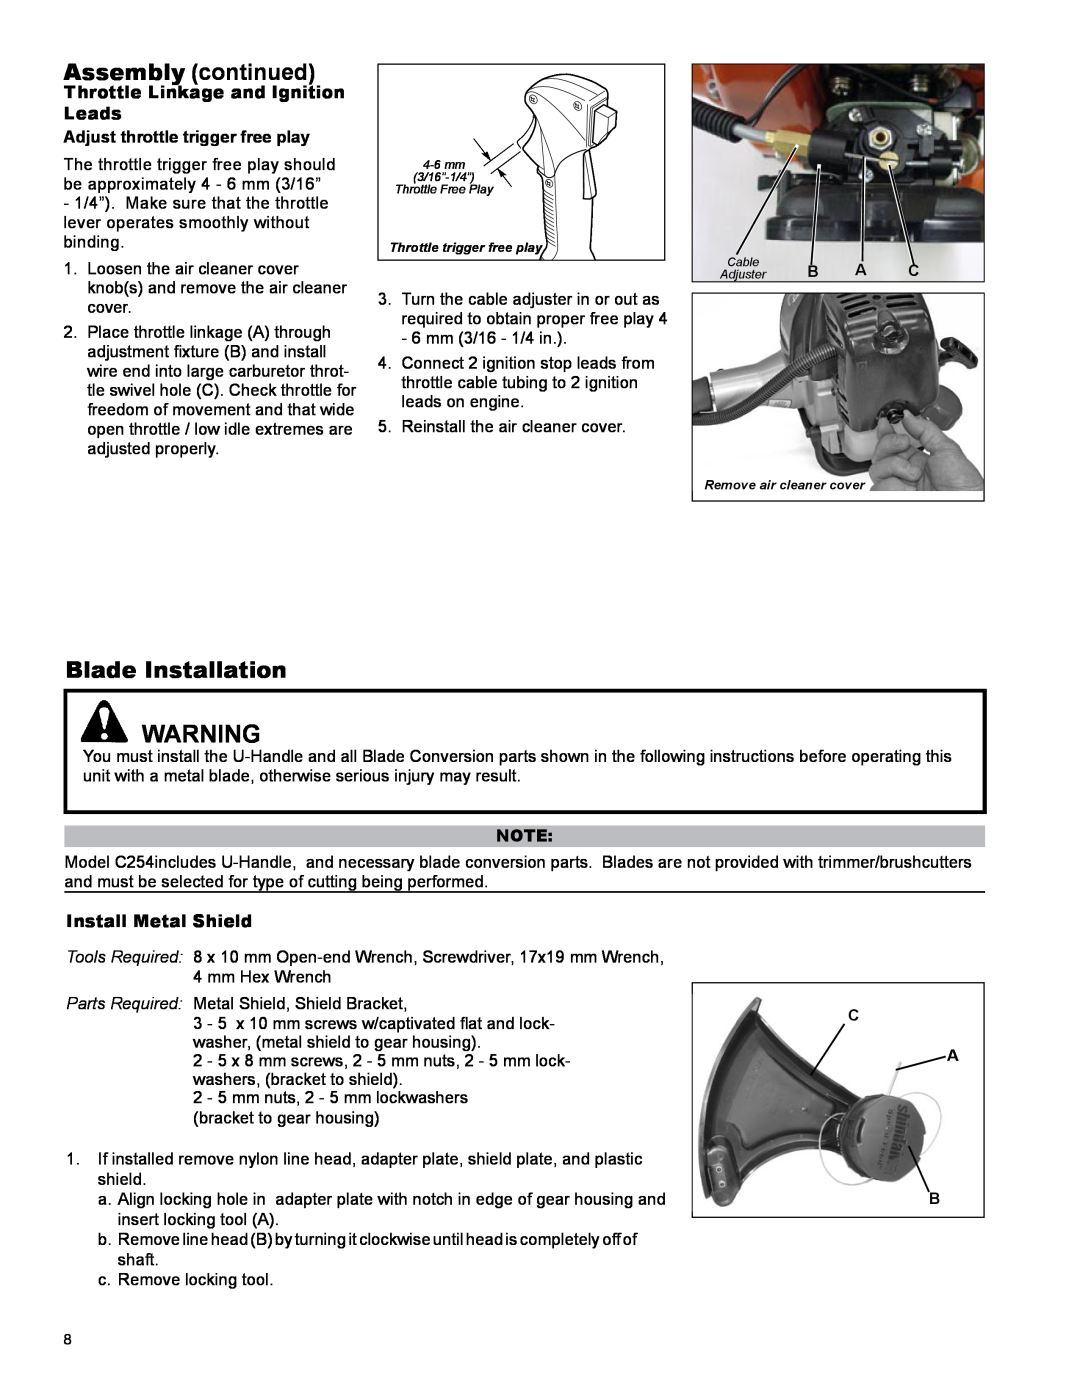 Shindaiwa X7502825900 manual Assembly continued, Blade Installation, Install Metal Shield 